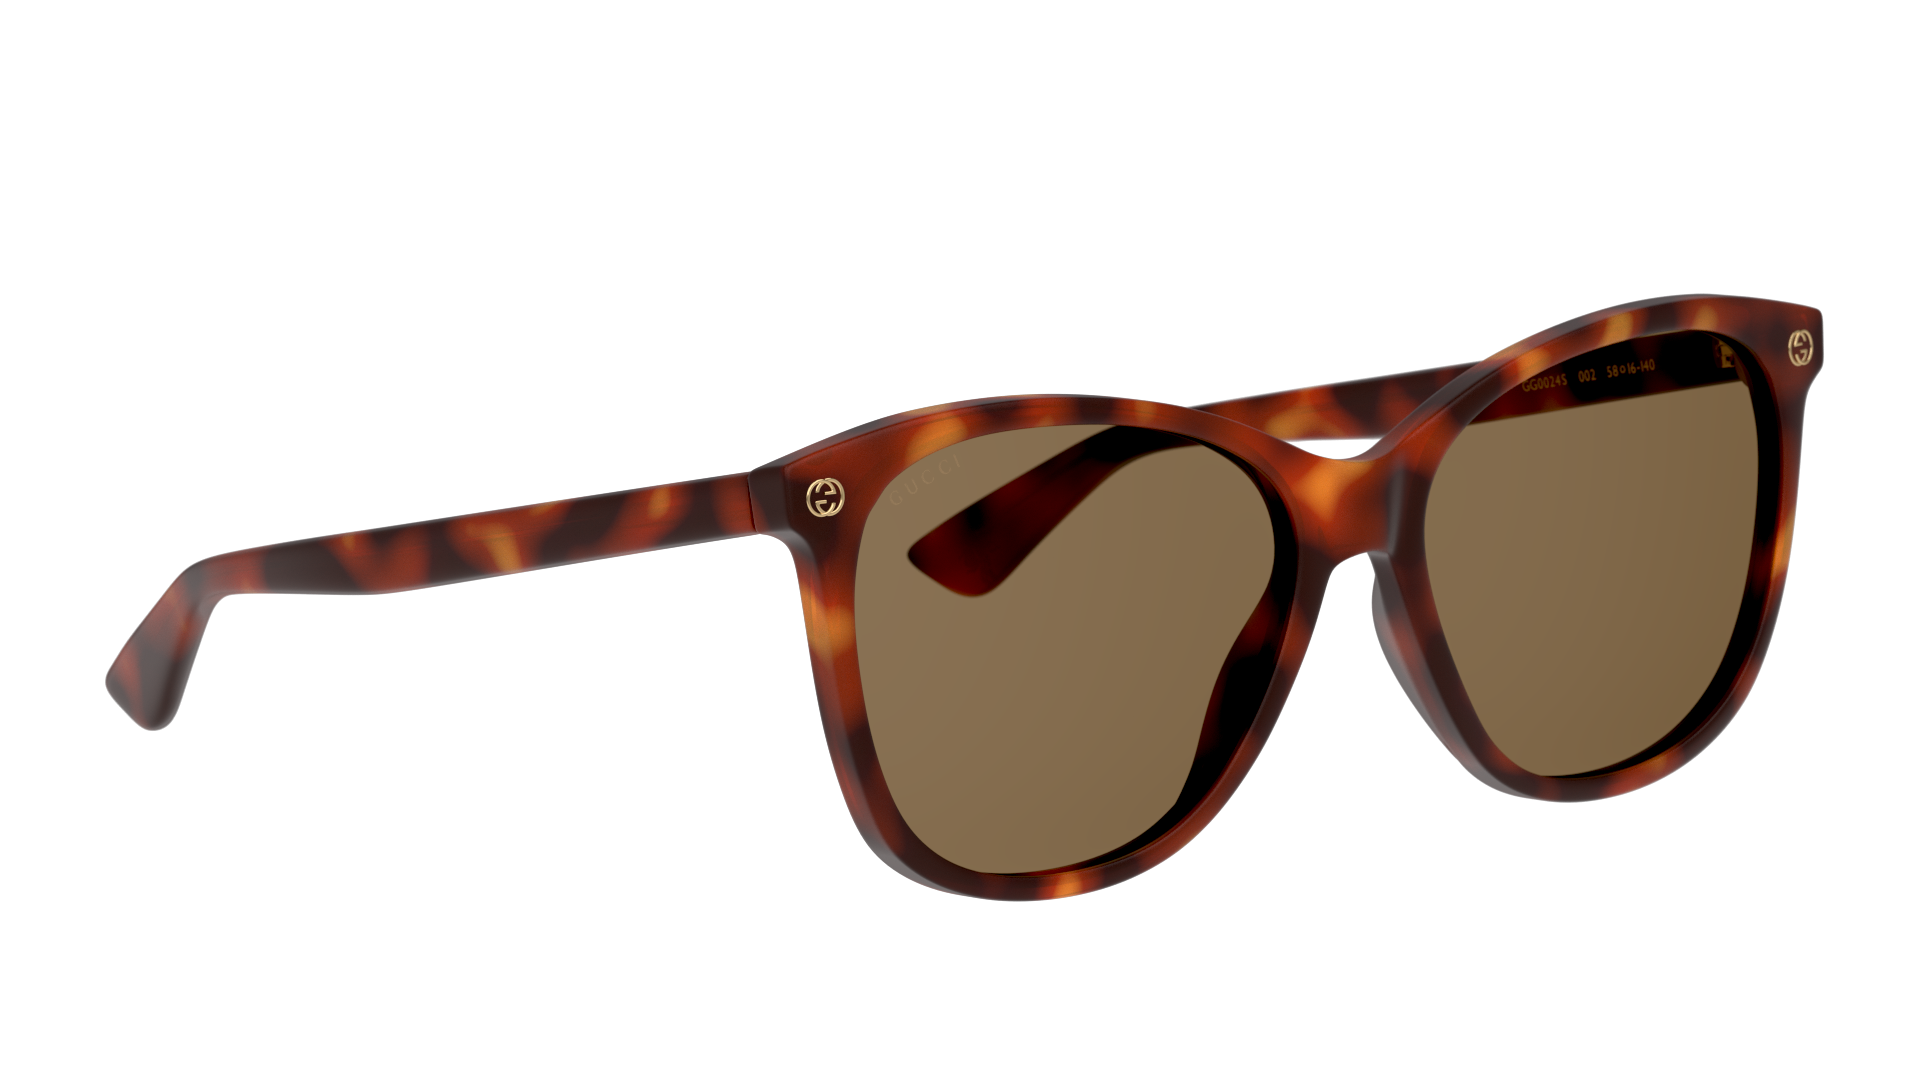 Angle_Right01 Gucci GG 0024S (002) Sunglasses Brown / Tortoise Shell